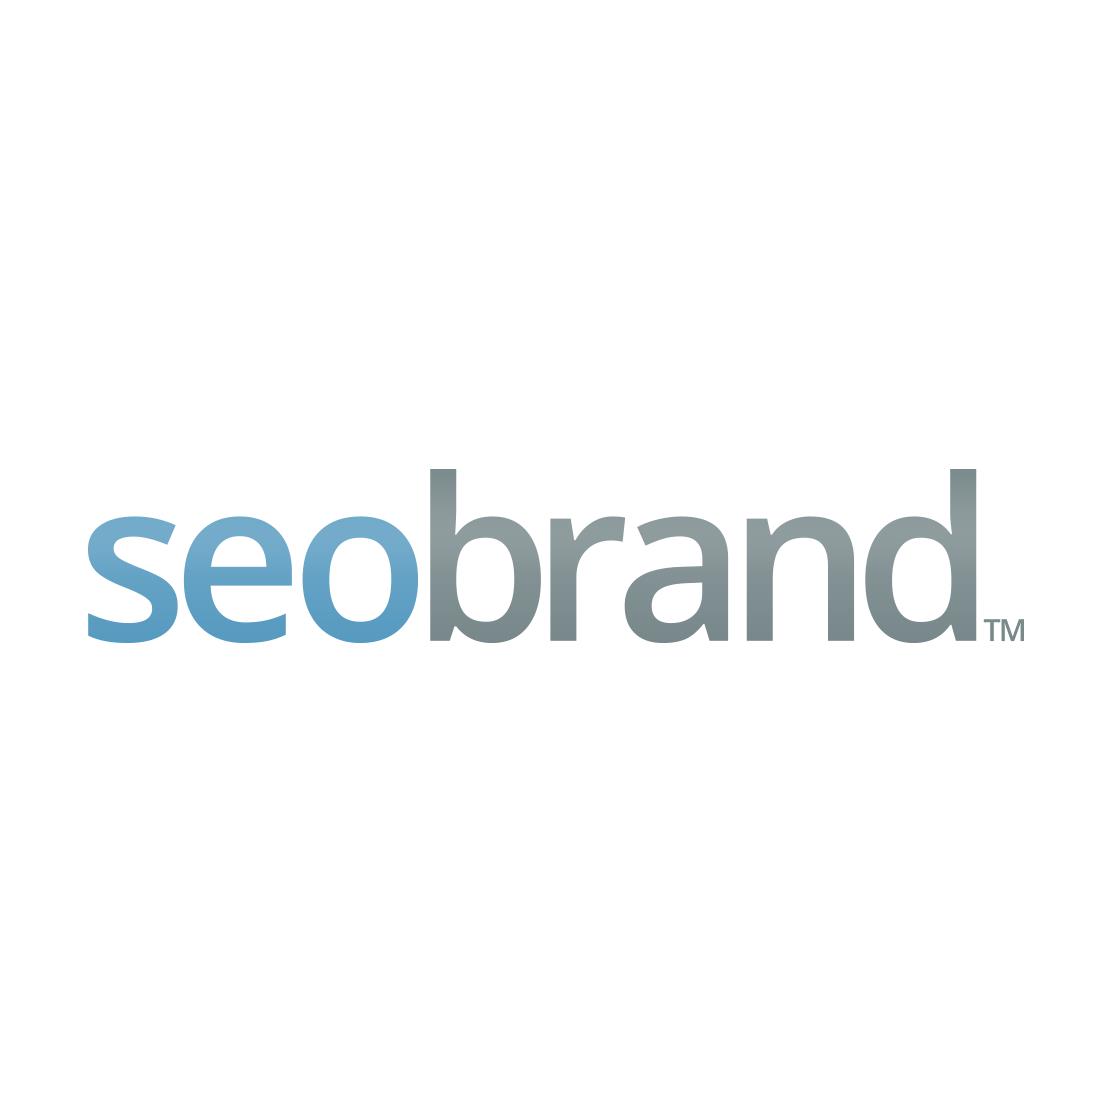 Best SEO Firm Logo: SEO Brand